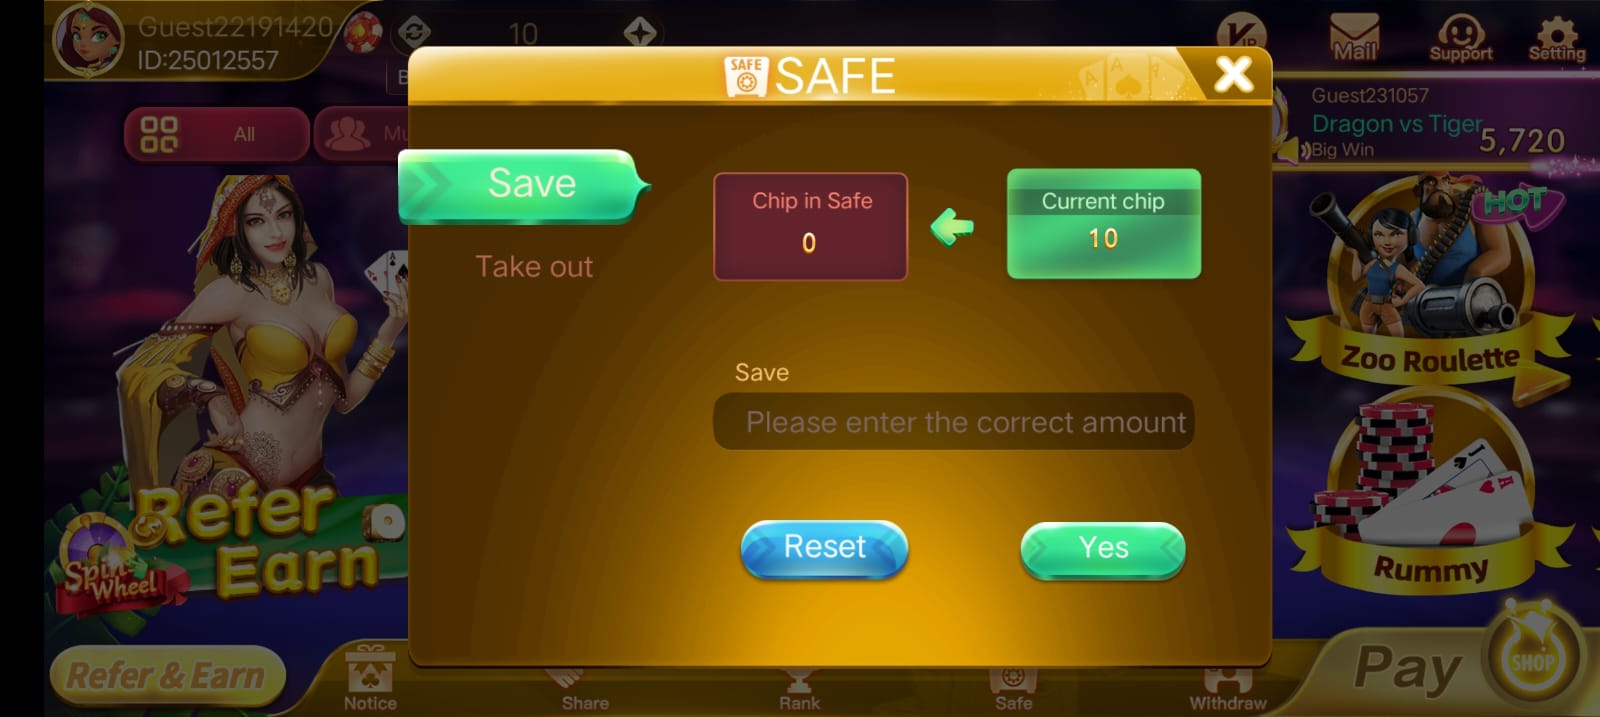 Safe Button Program In Rummy Mate App ?